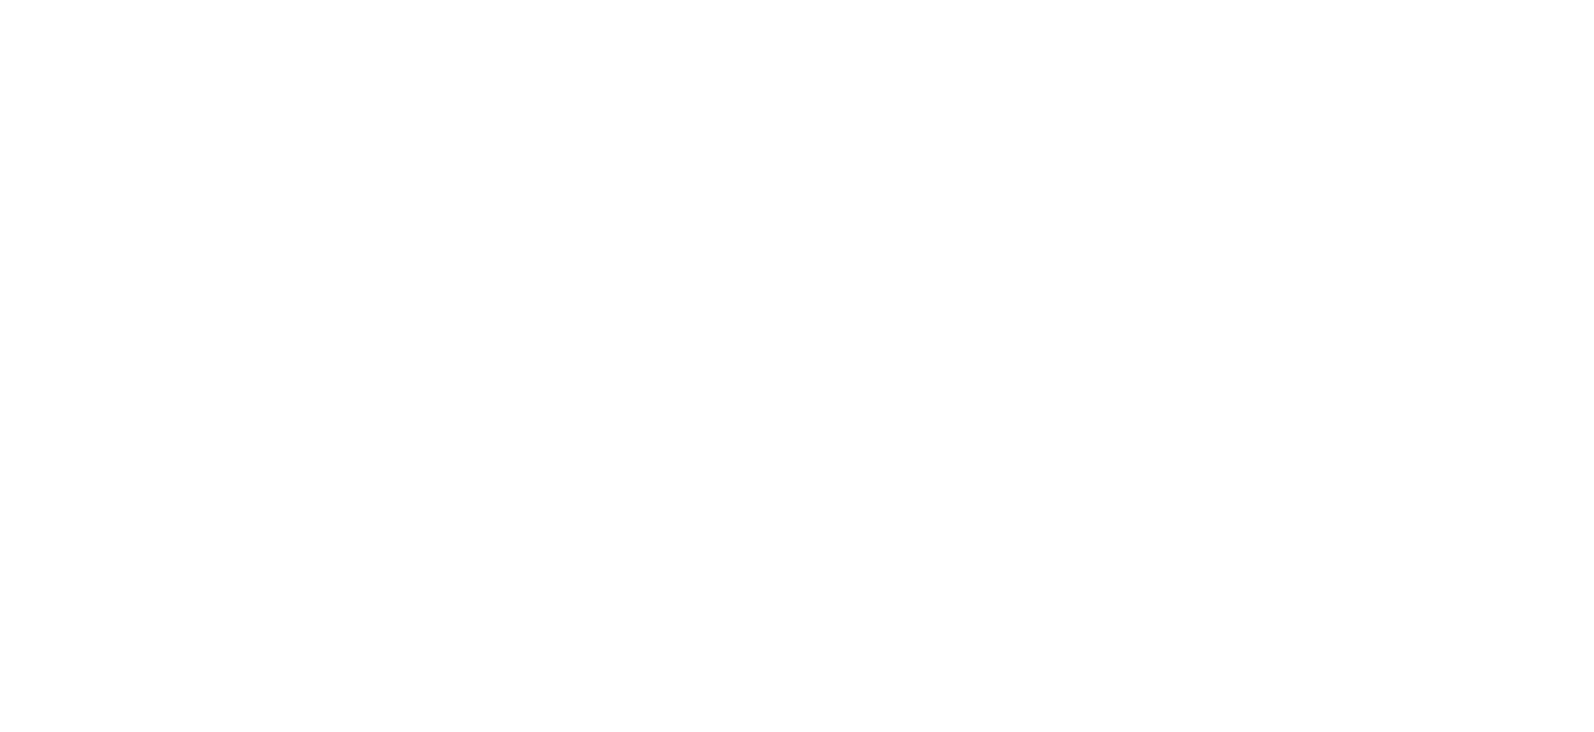 SES S.A. Logo groß für dunkle Hintergründe (transparentes PNG)